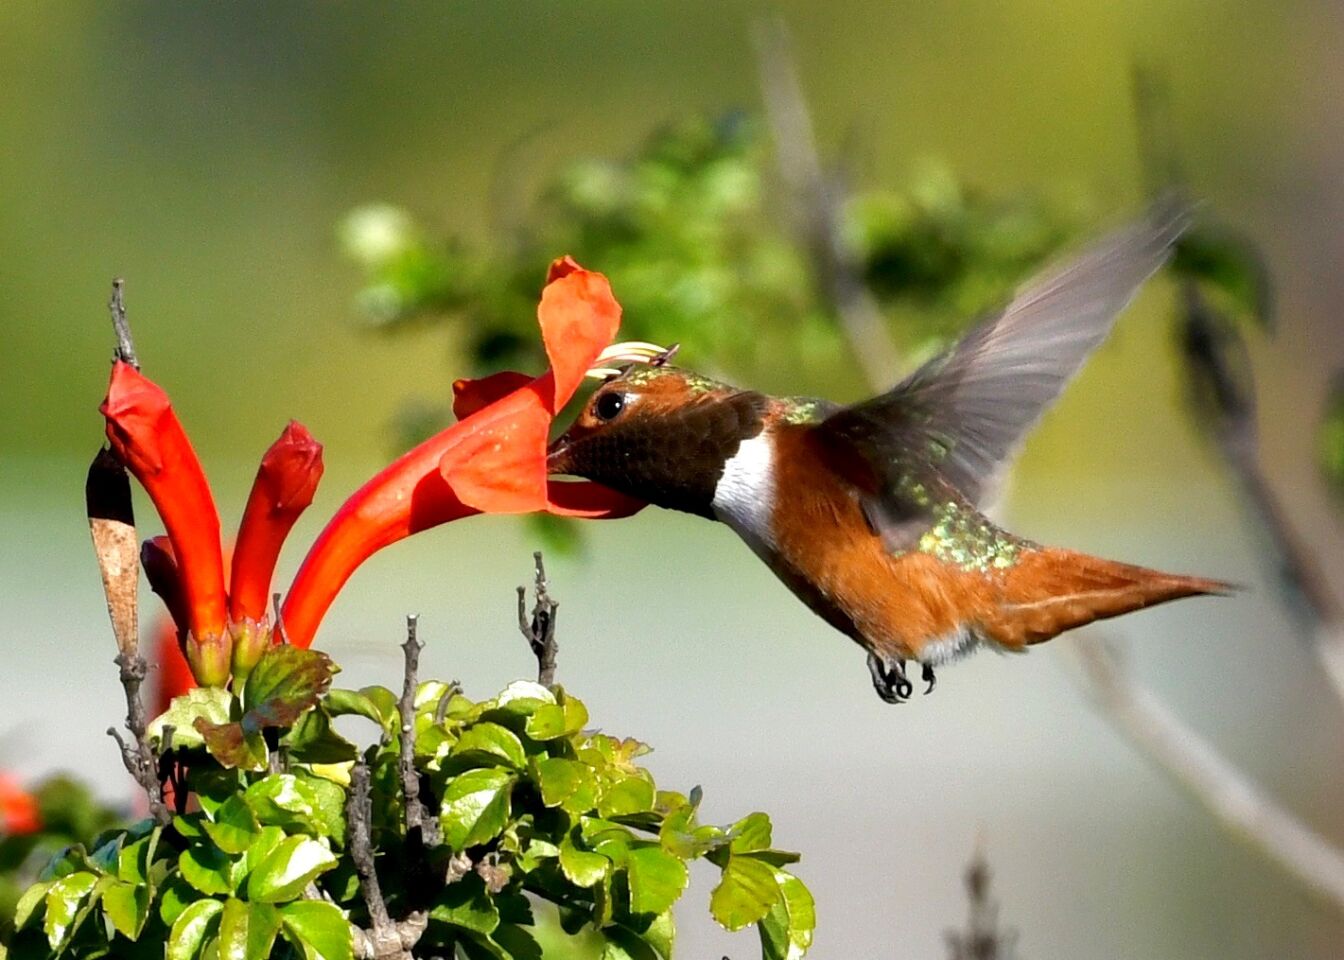 A hummingbird takes a lunch break.